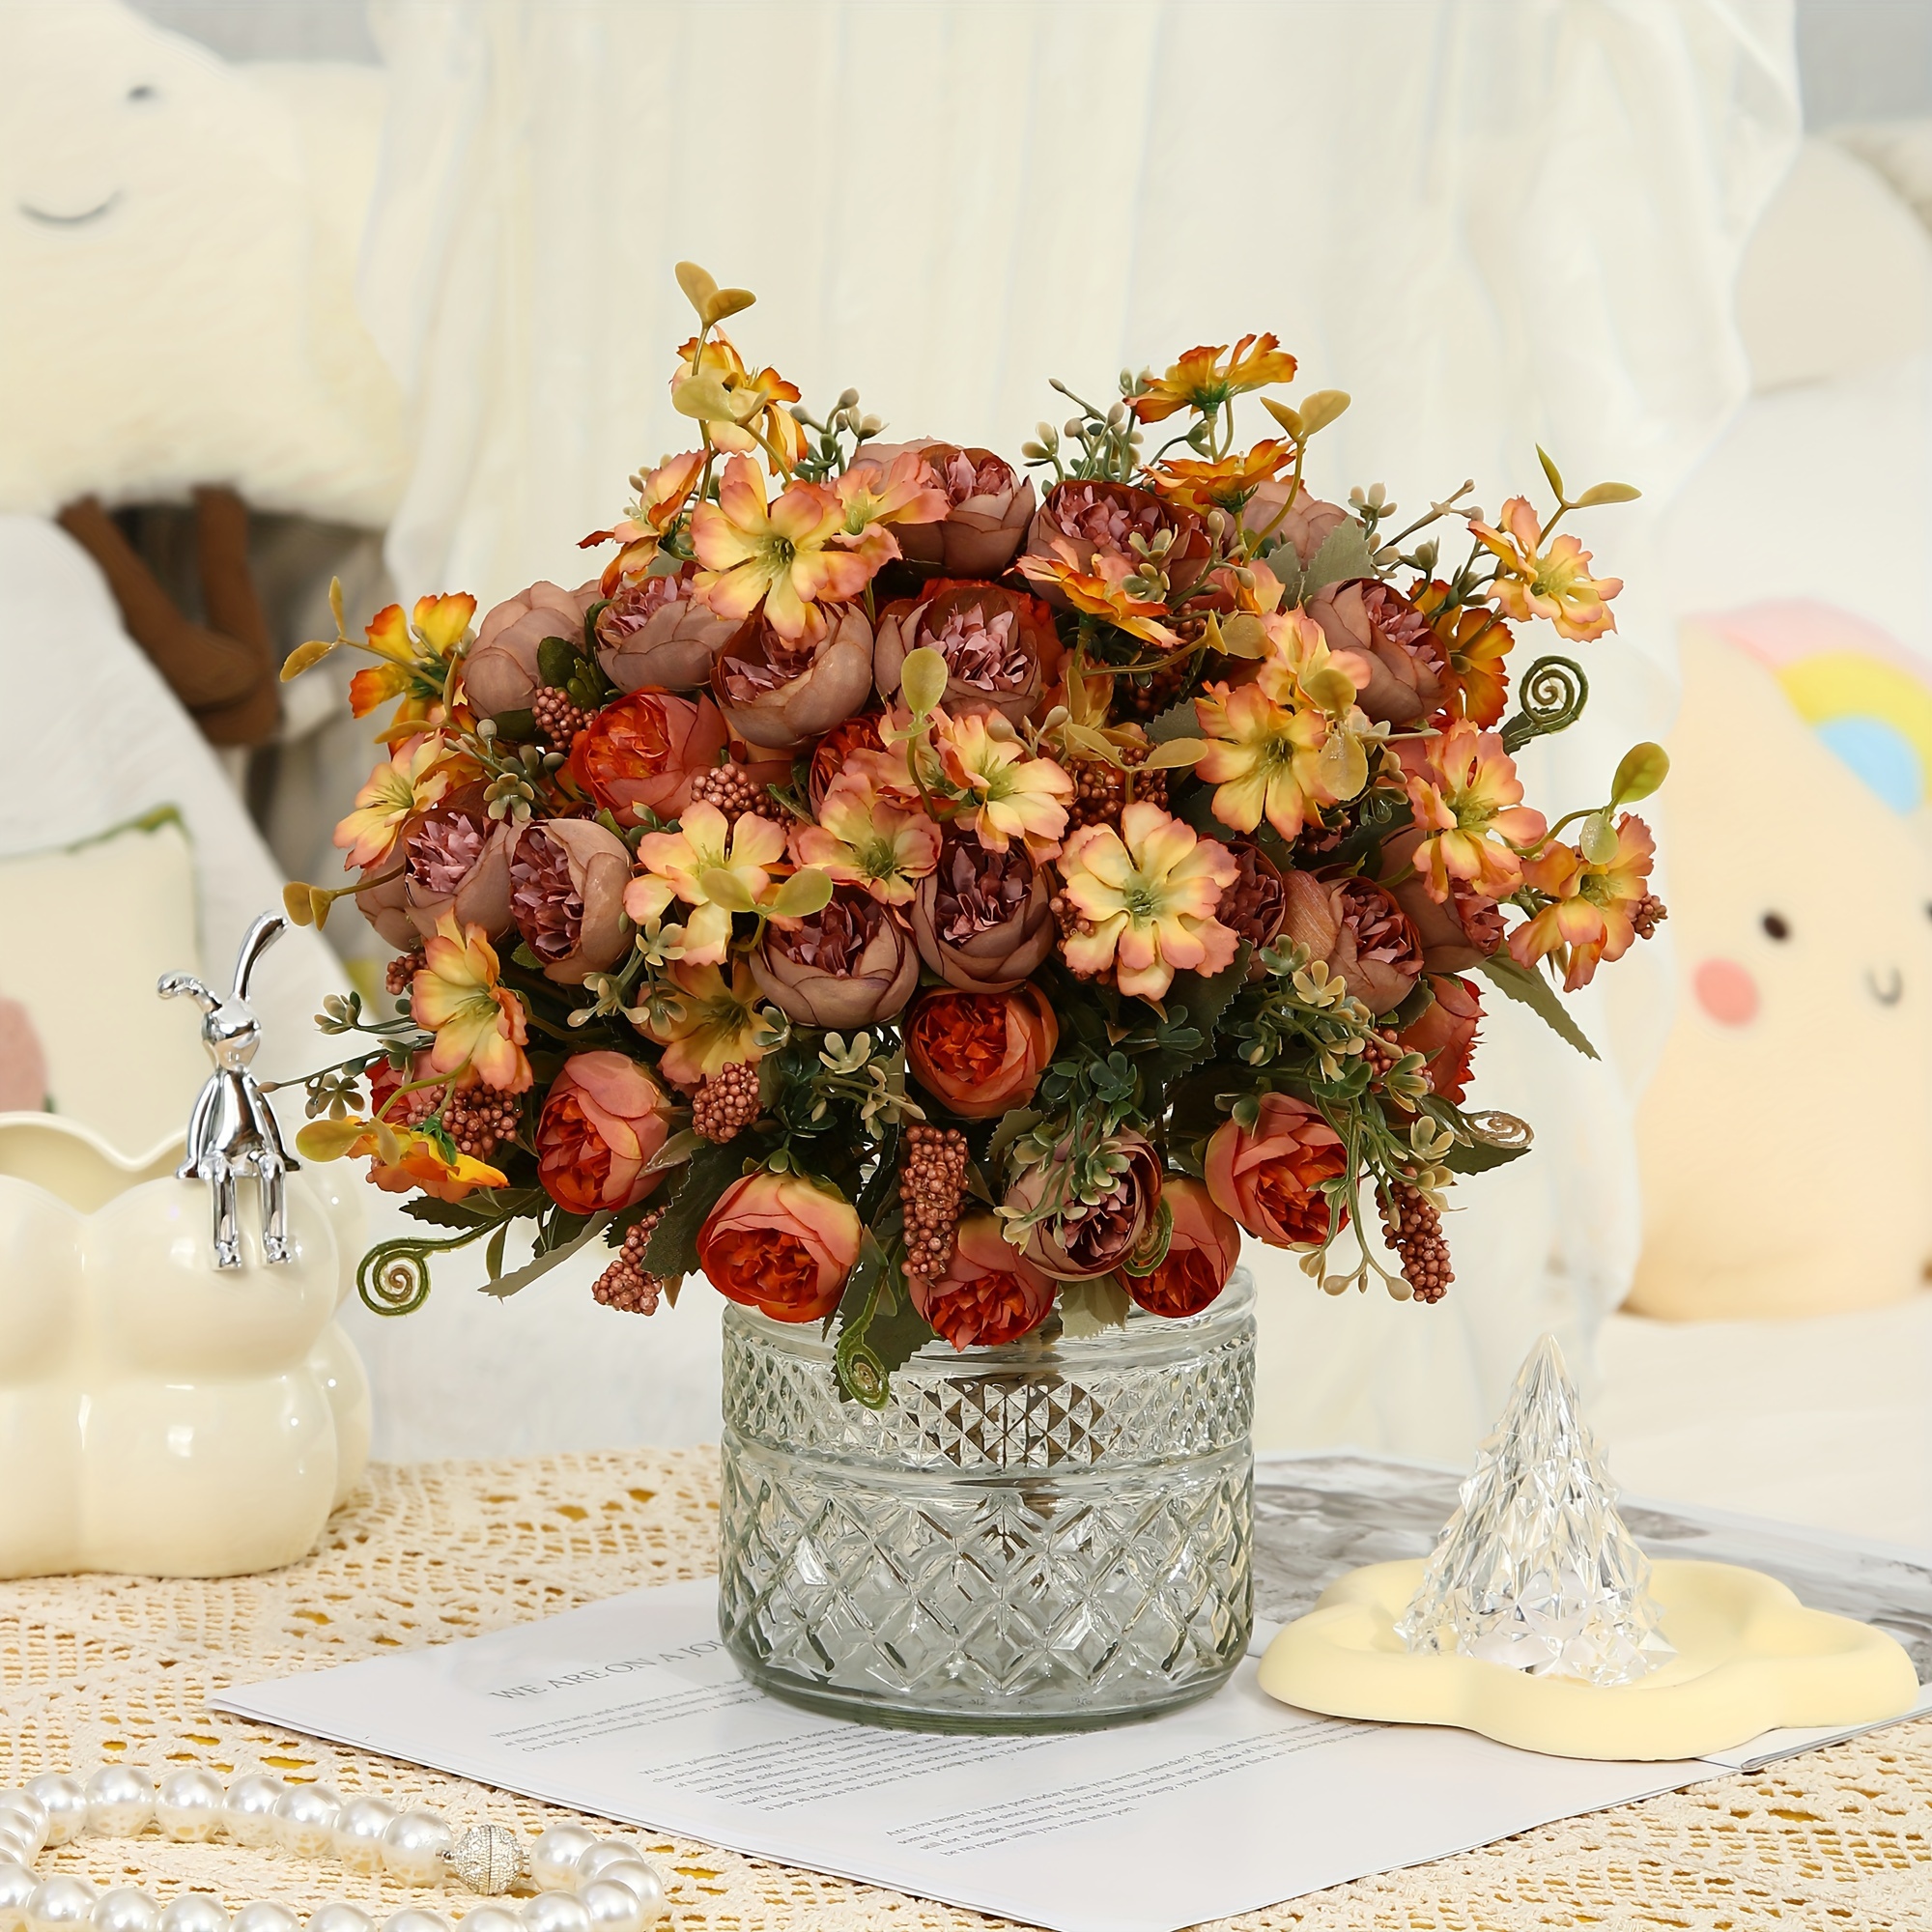 Premium Floral Accessories and Decorations for Flower Arrangements